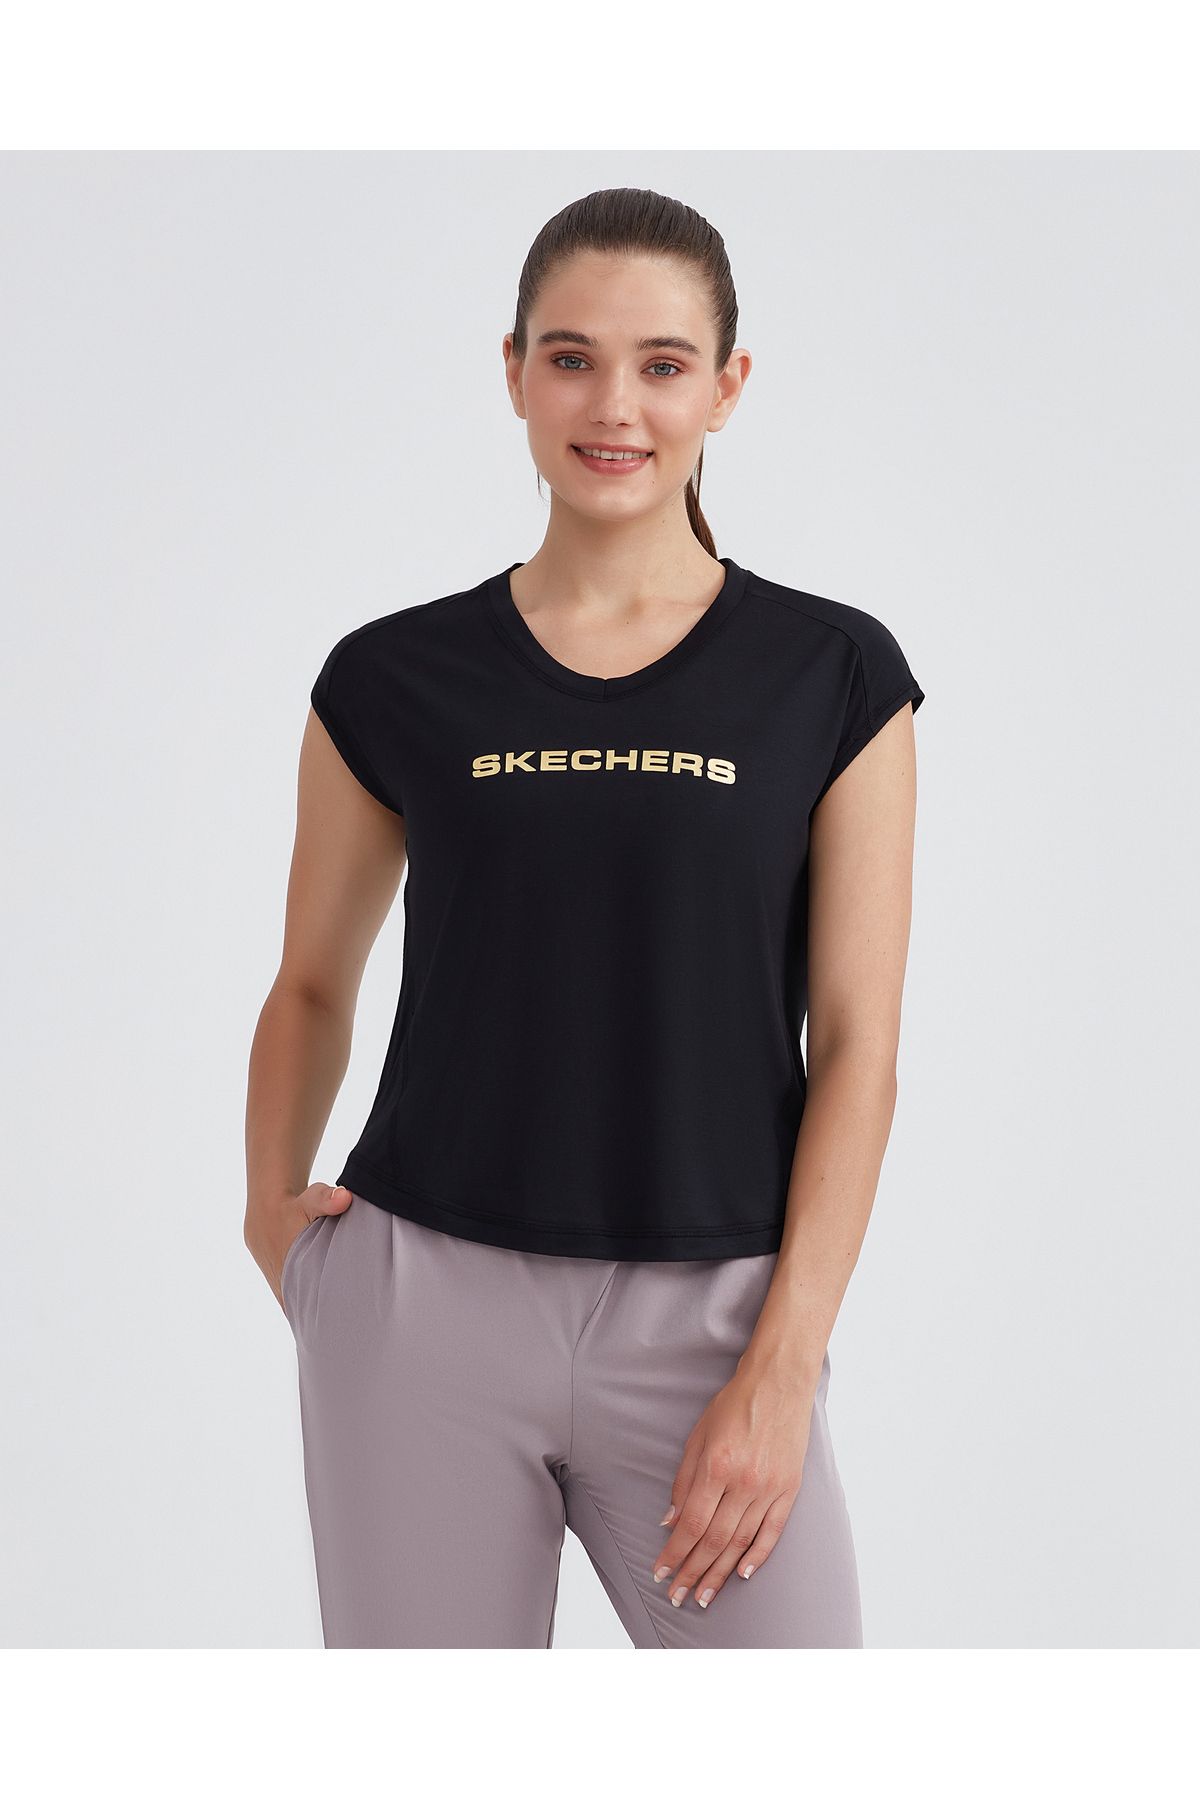 Skechers Graphic Tee W Crew Neck T-shirt Kadın Siyah Tshirt S211289-001